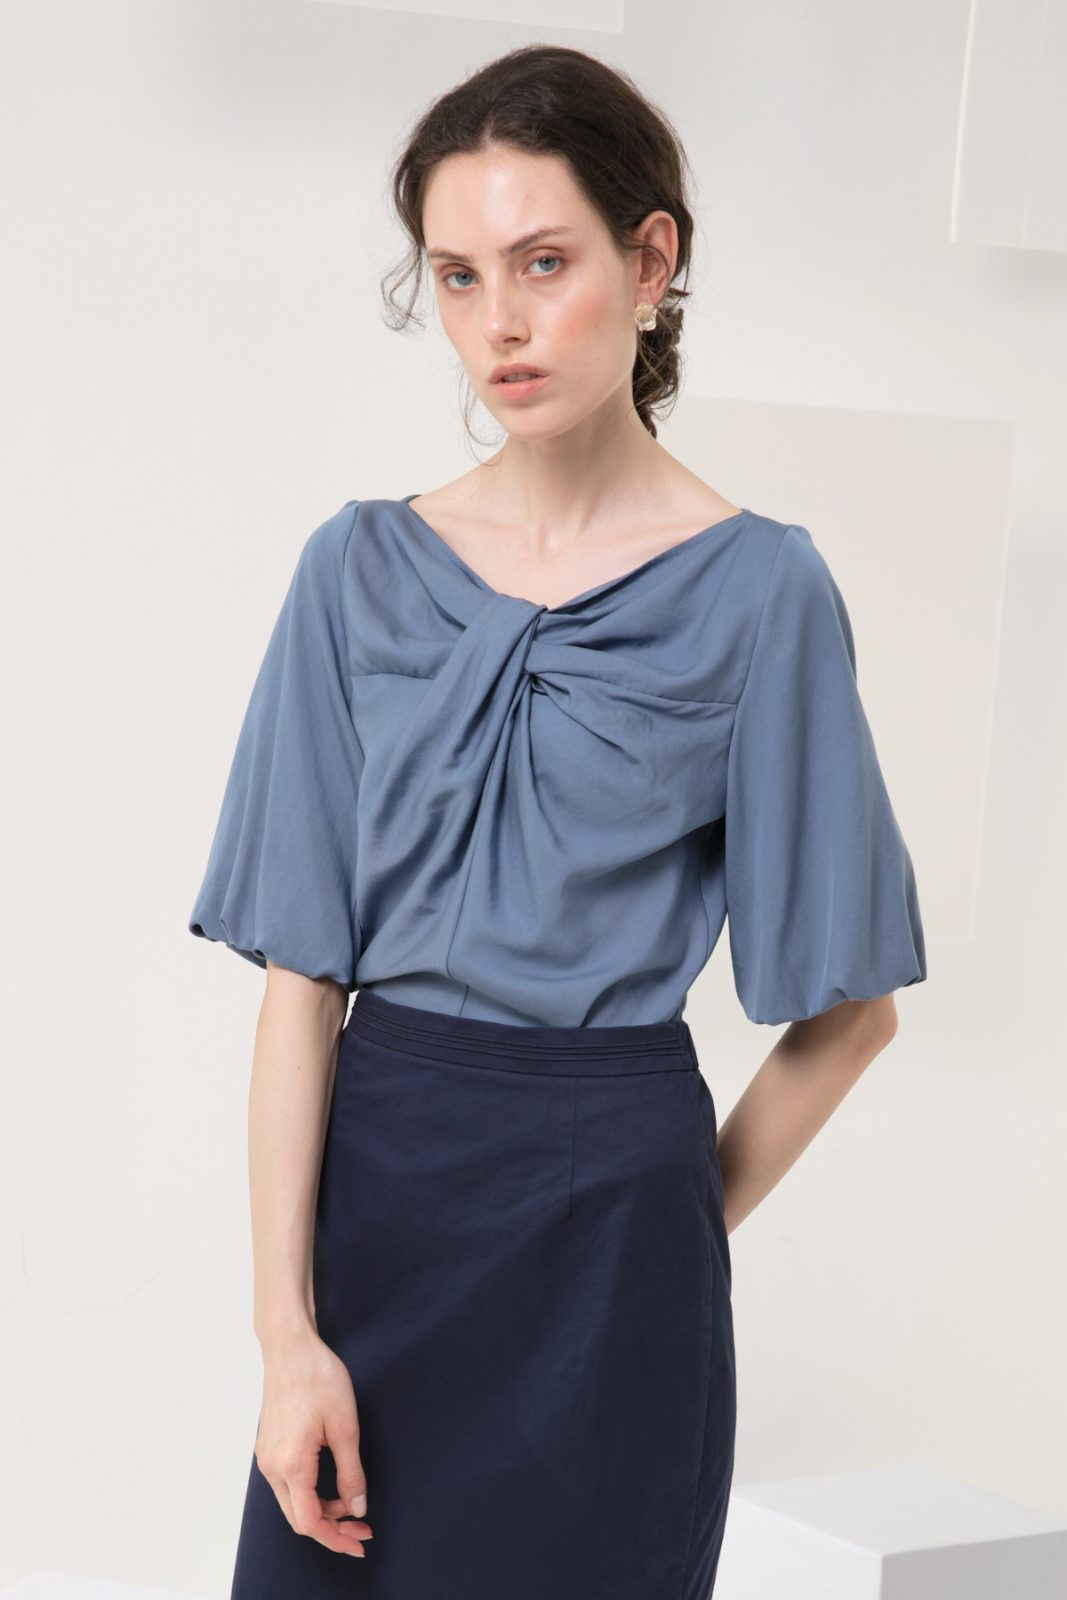 SKYE minimalist women clothing fashion Kai Knot Top blue 5